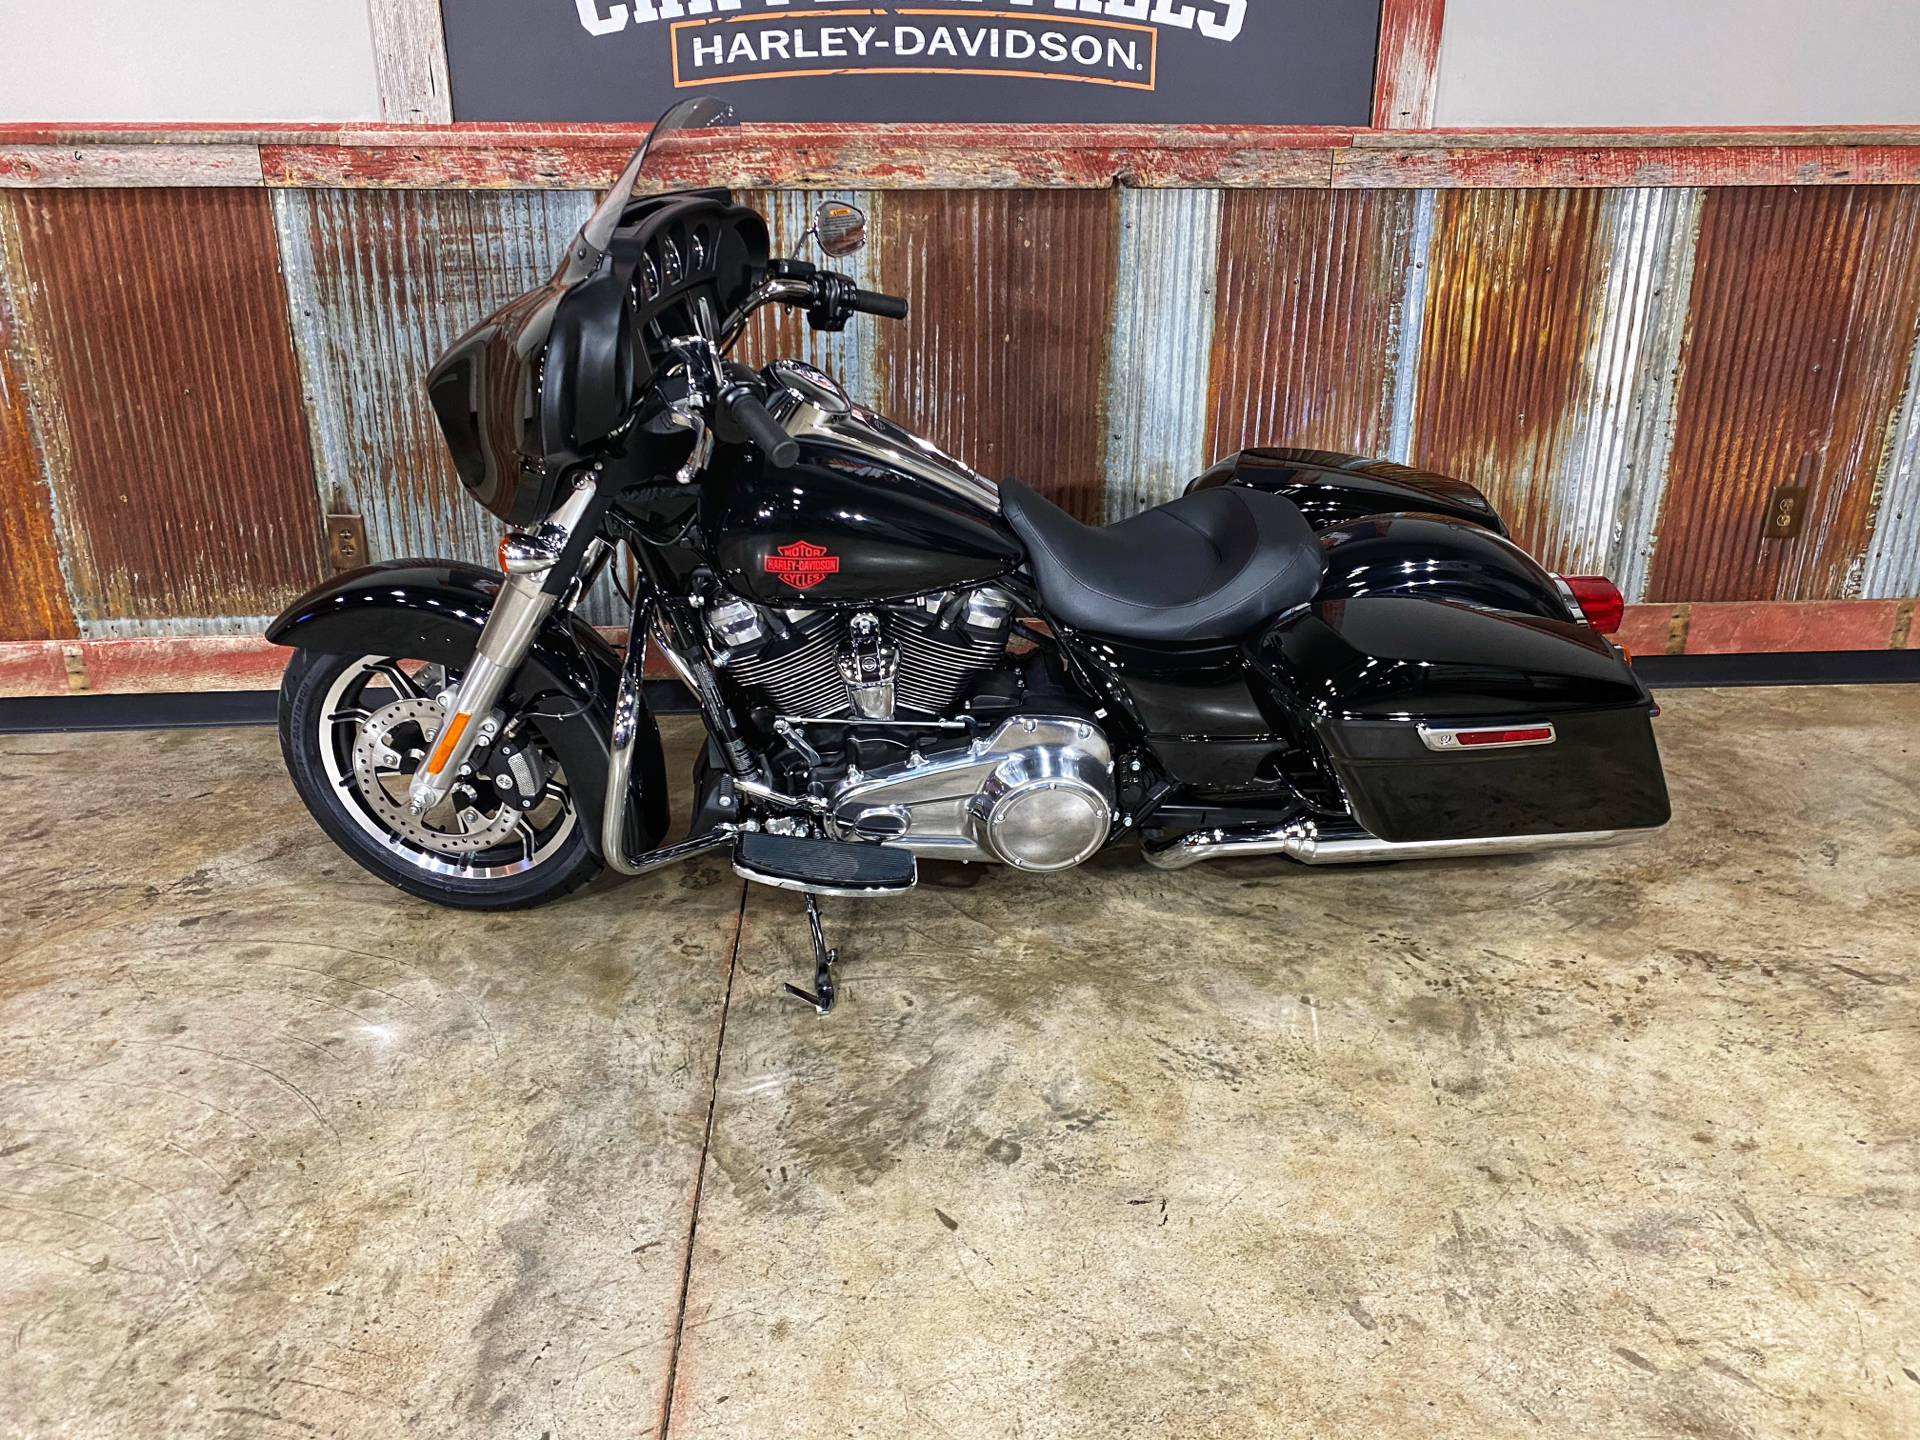 New 2021 Harley Davidson Electra Glide Standard Vivid Black Motorcycles In Chippewa Falls Wi Fl612512